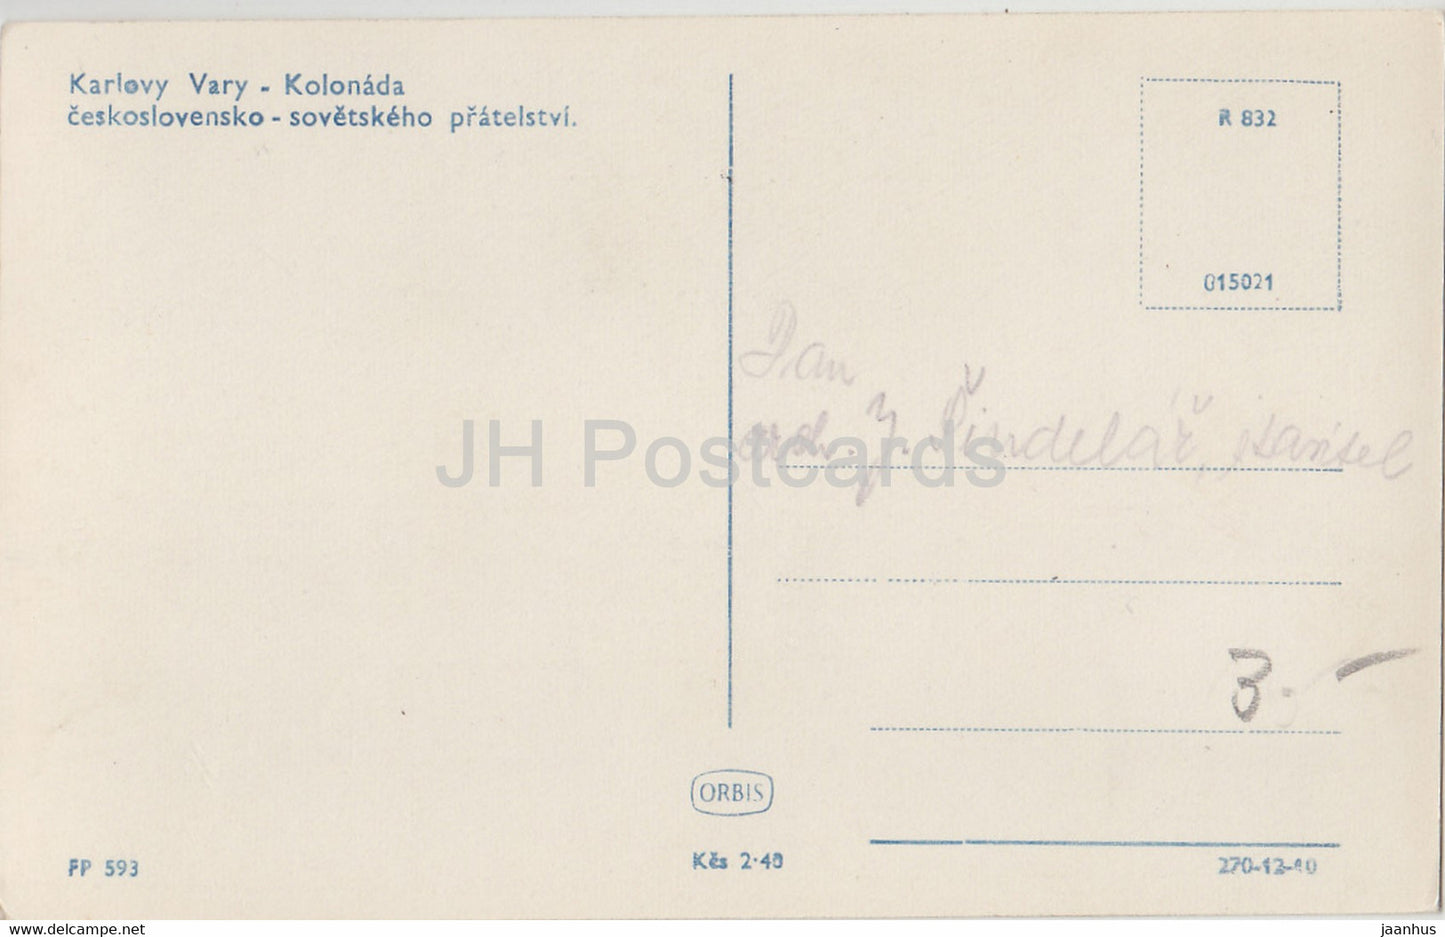 Karlovy Vary - Karlsbad - kolonada - Colonnade - 593 - old postcard - Czechoslovakia - Czech Republic - unused